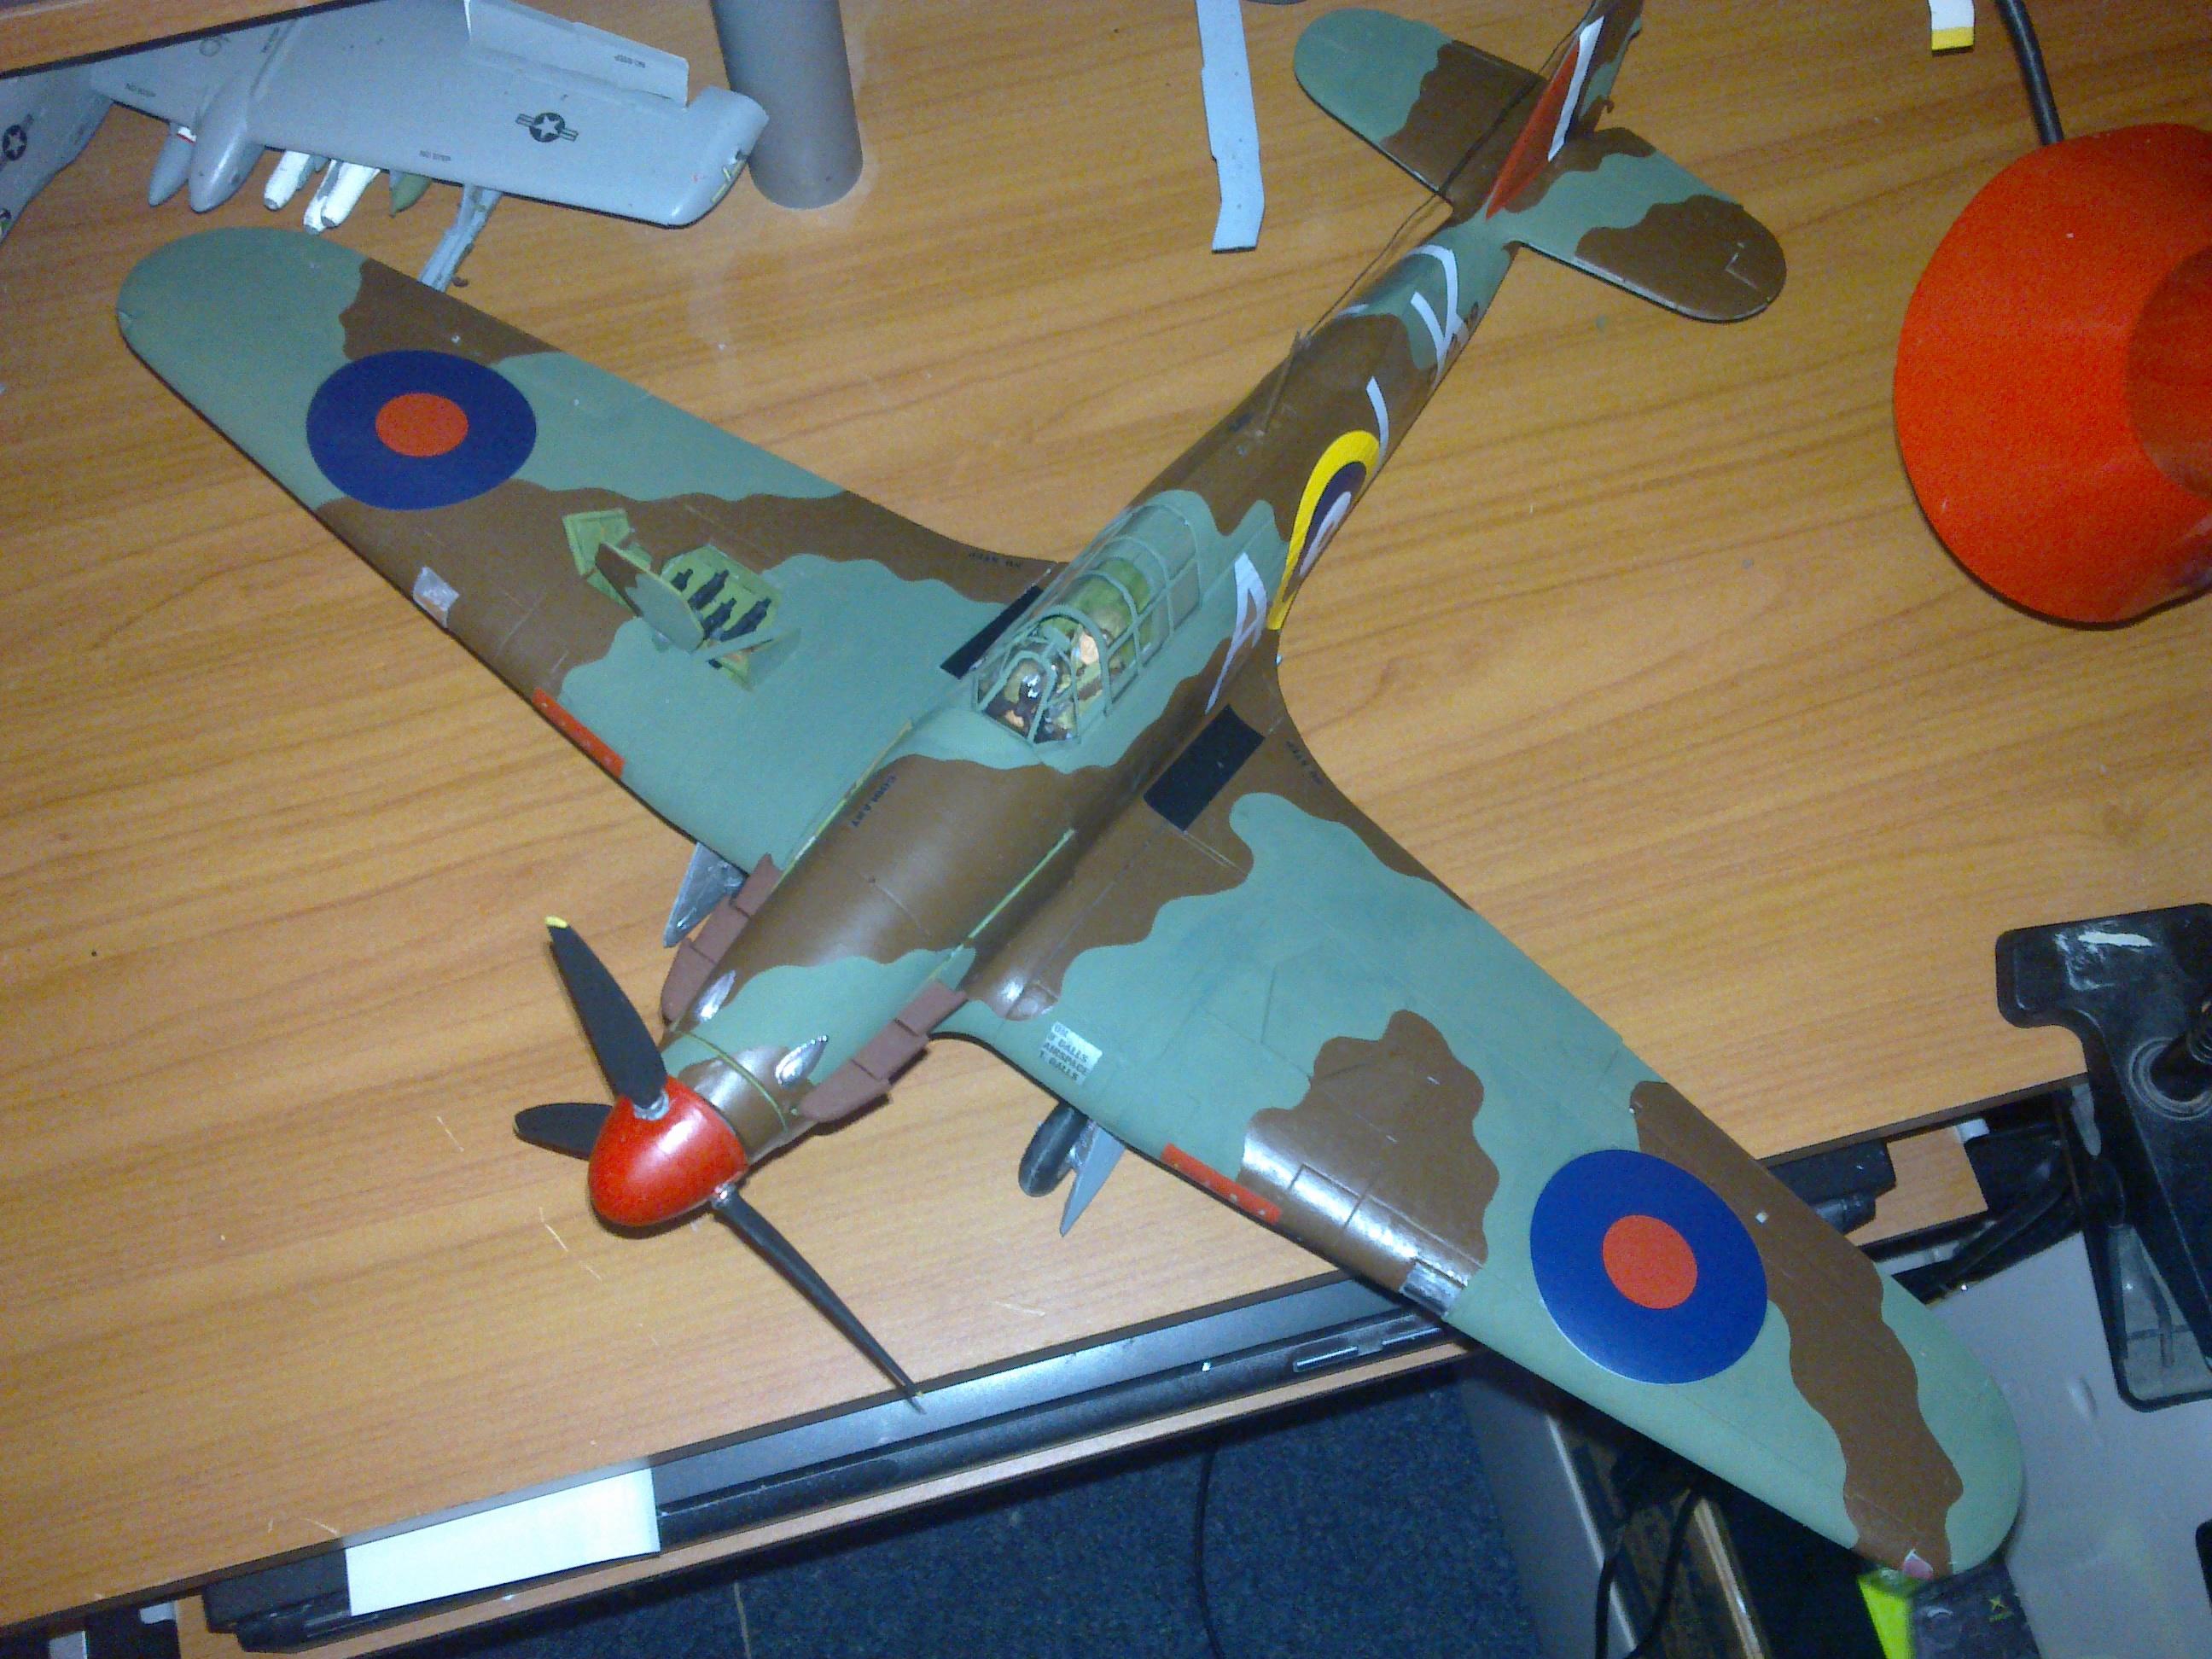 Hawker Hurricane camoflage